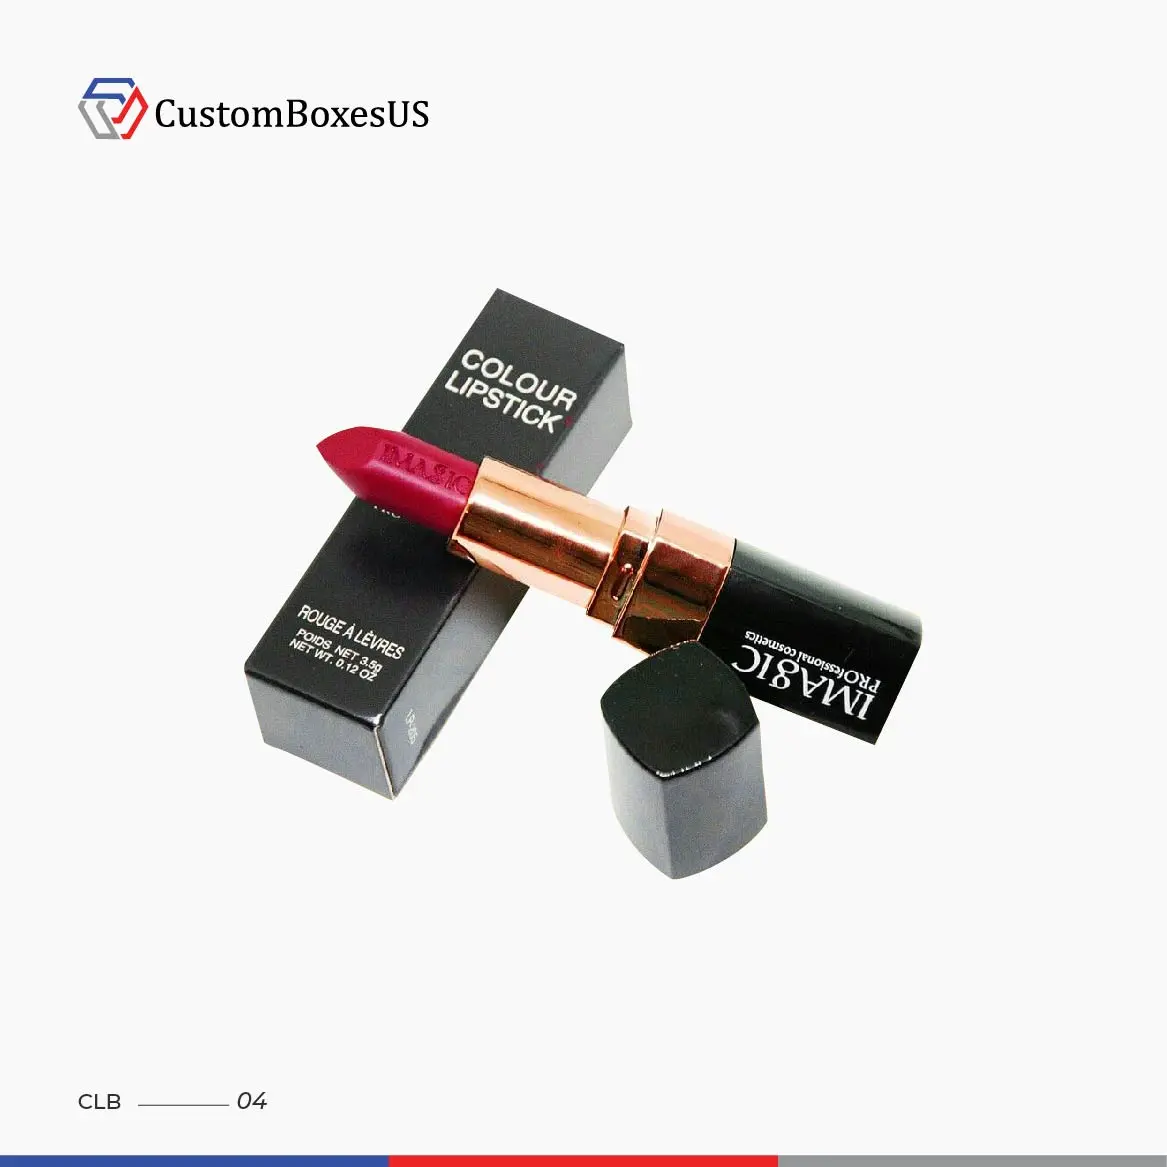 Custom Lipstick Boxes